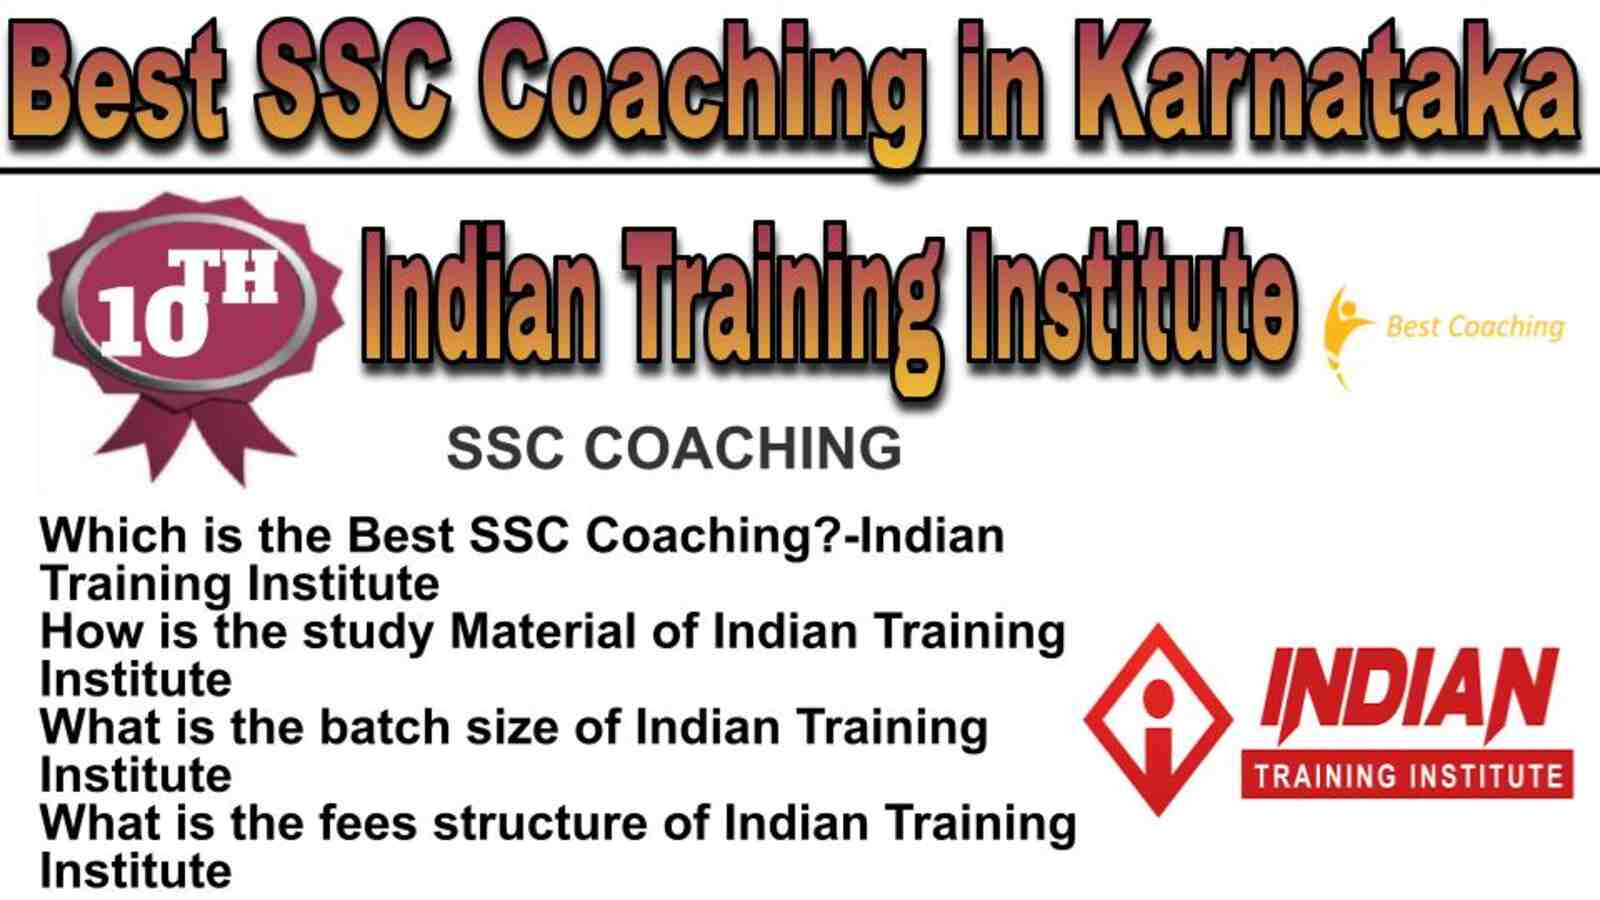 Rank 10 best SSC coaching in Karnataka